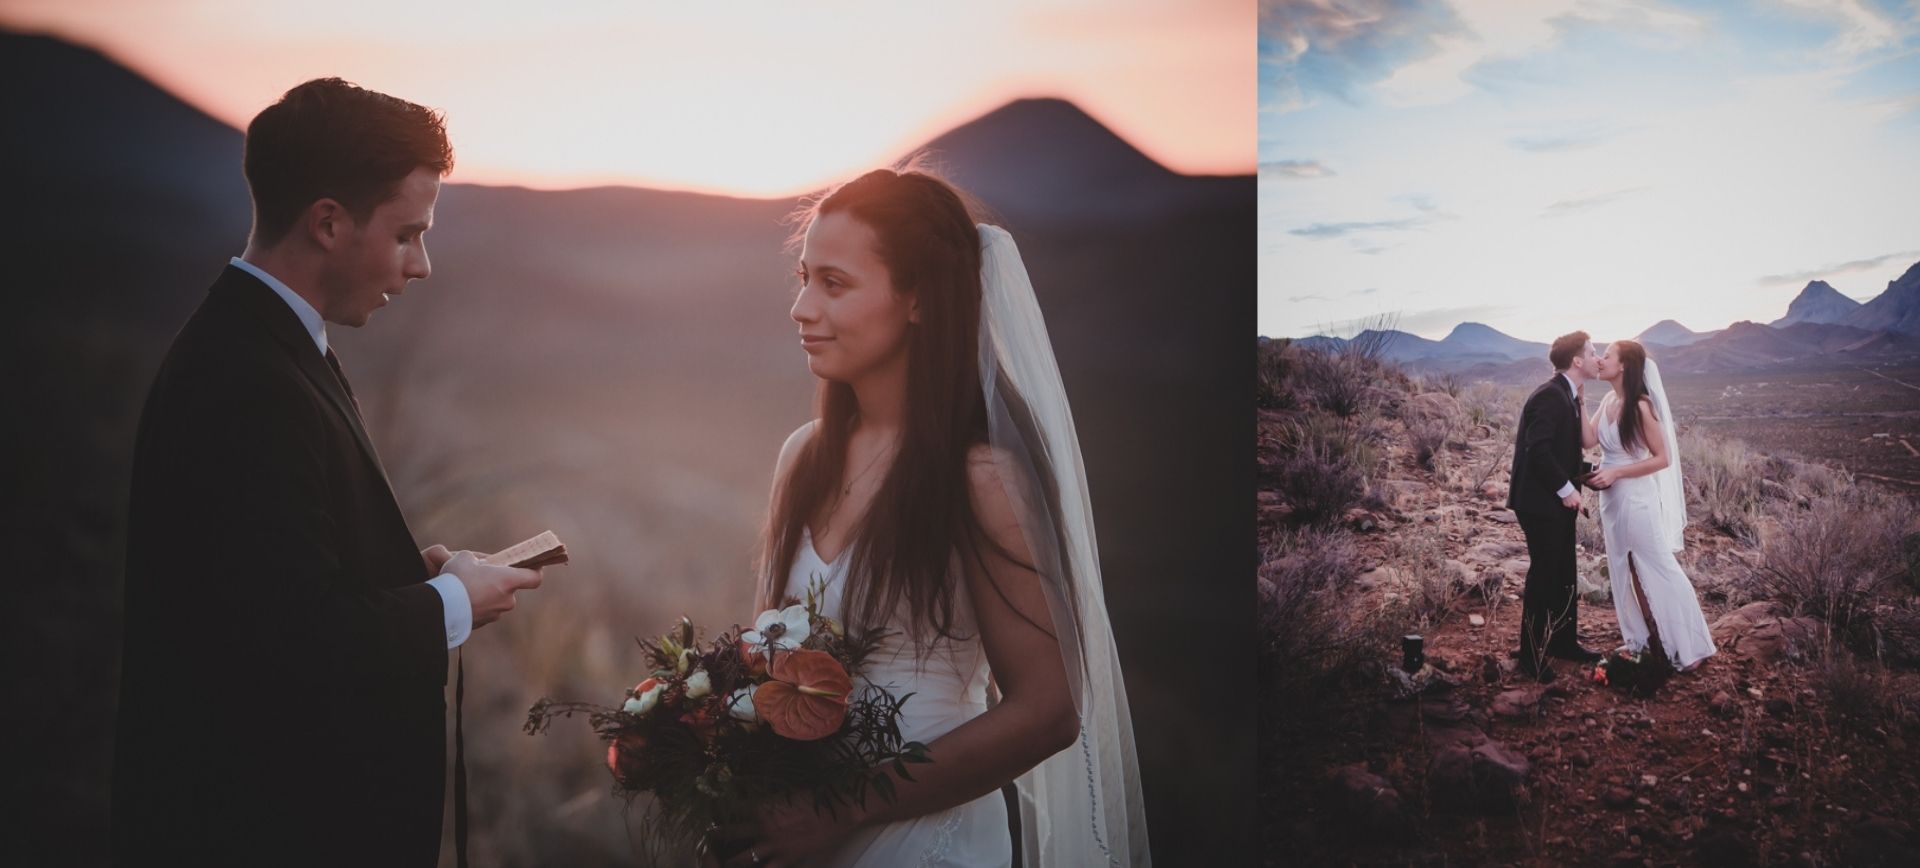 texas adventure wedding - elopement package at big bend national park